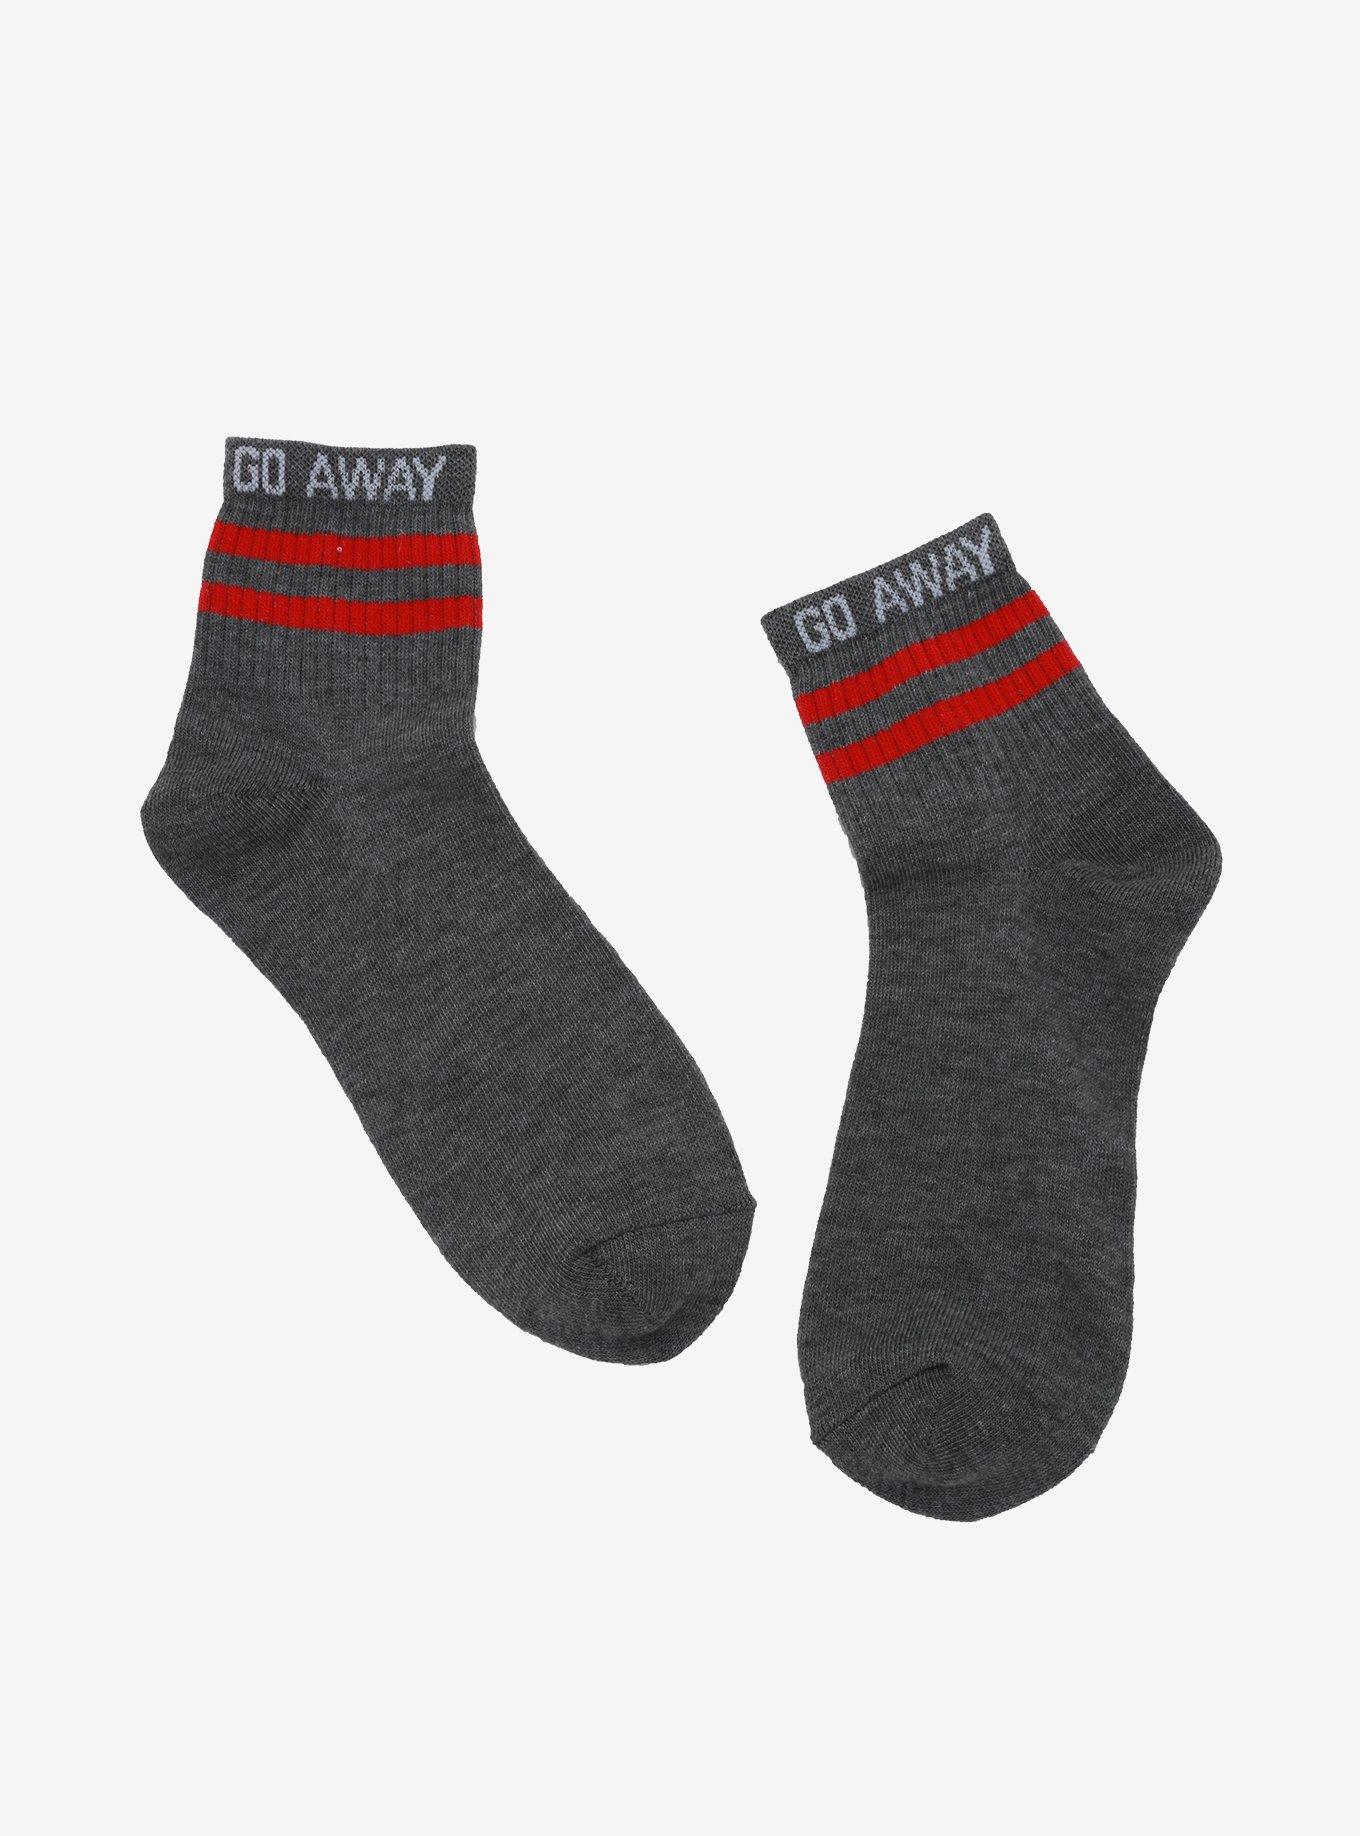 Go Away Grey & Red Ankle Socks, , alternate